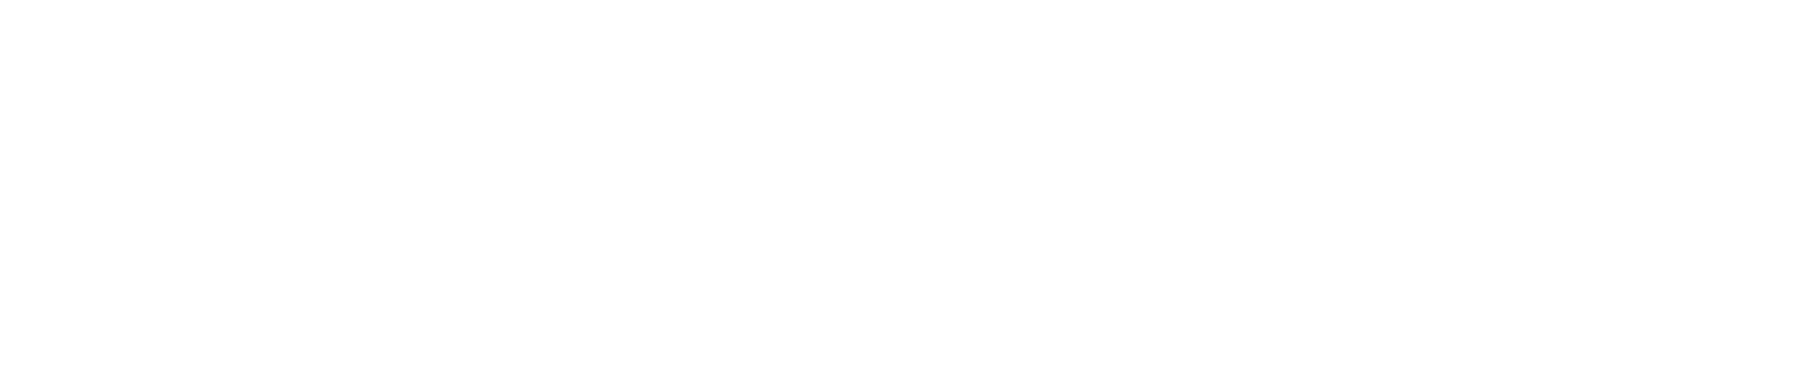 Earthdiver company logo